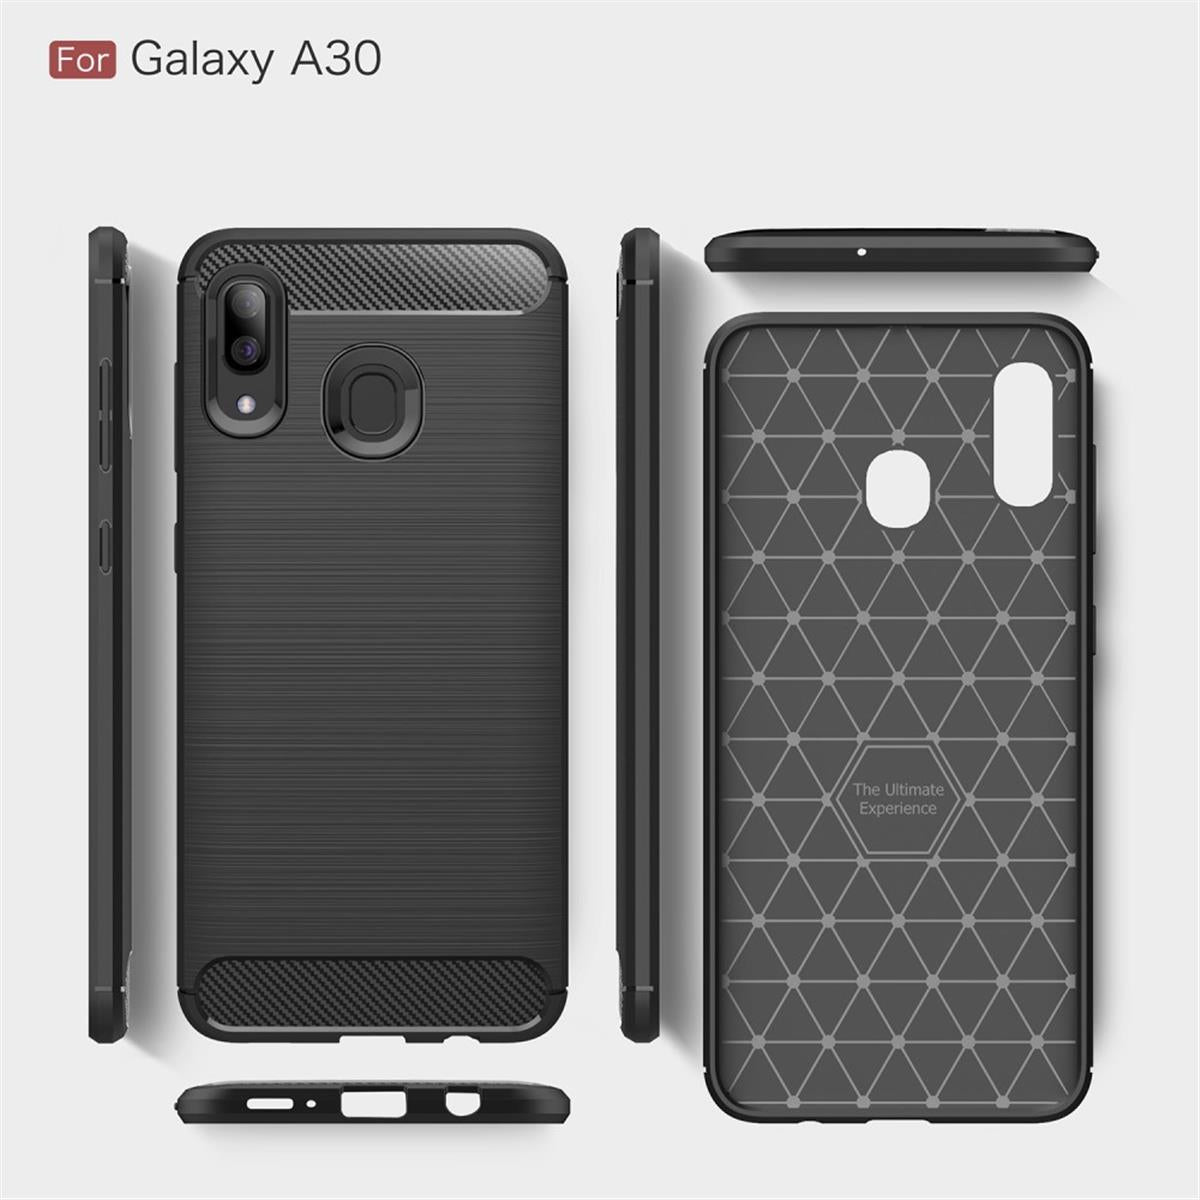 Hülle für Samsung Galaxy A30 Handyhülle Schutzhülle Silikon Case Carbon Farben